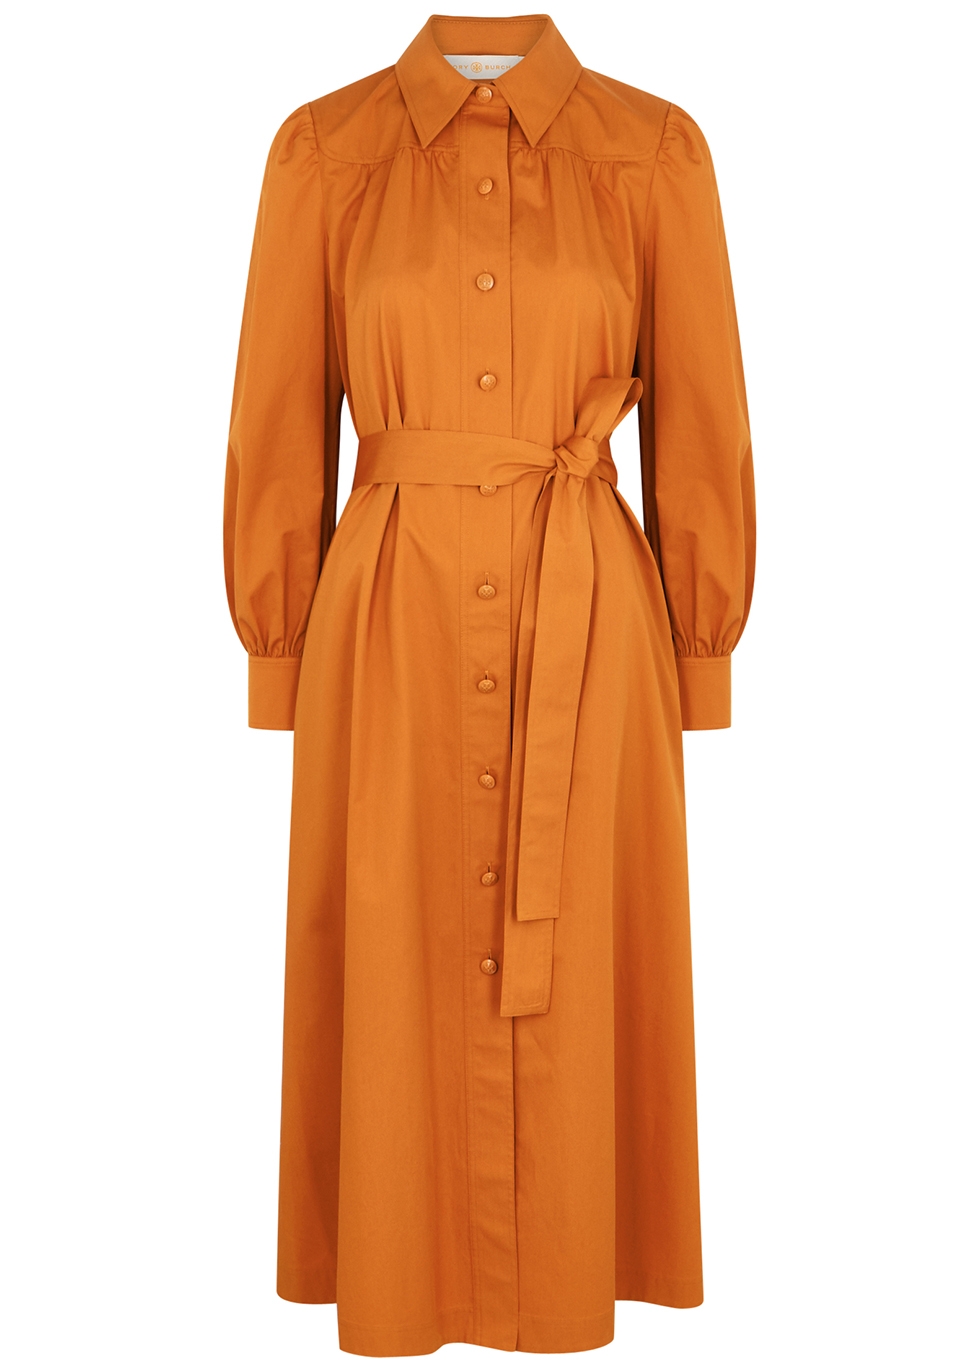 Tory Burch Artist orange cotton-poplin shirt dress - Harvey Nichols